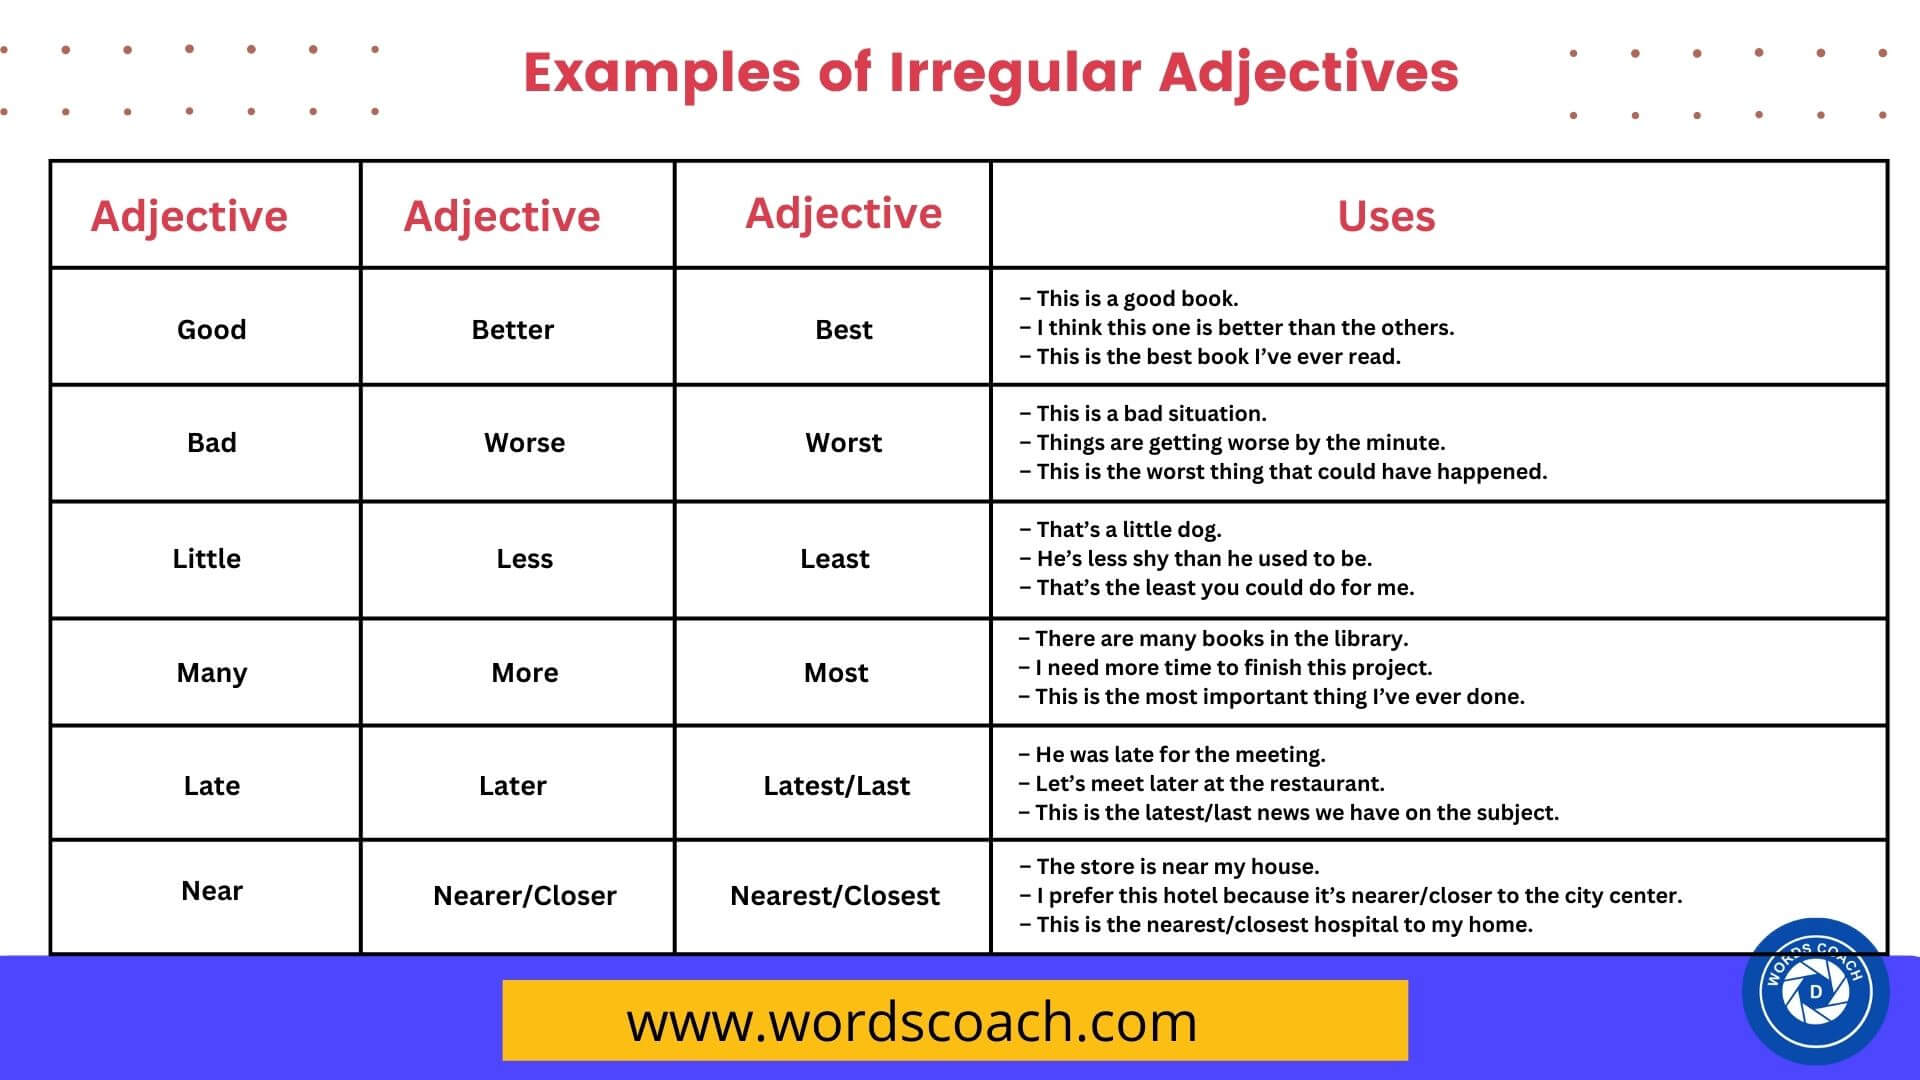 https://www.wordscoach.com/blog/wp-content/uploads/2023/03/Examples-of-Irregular-Adjectives-wordscoach.com-1.jpg